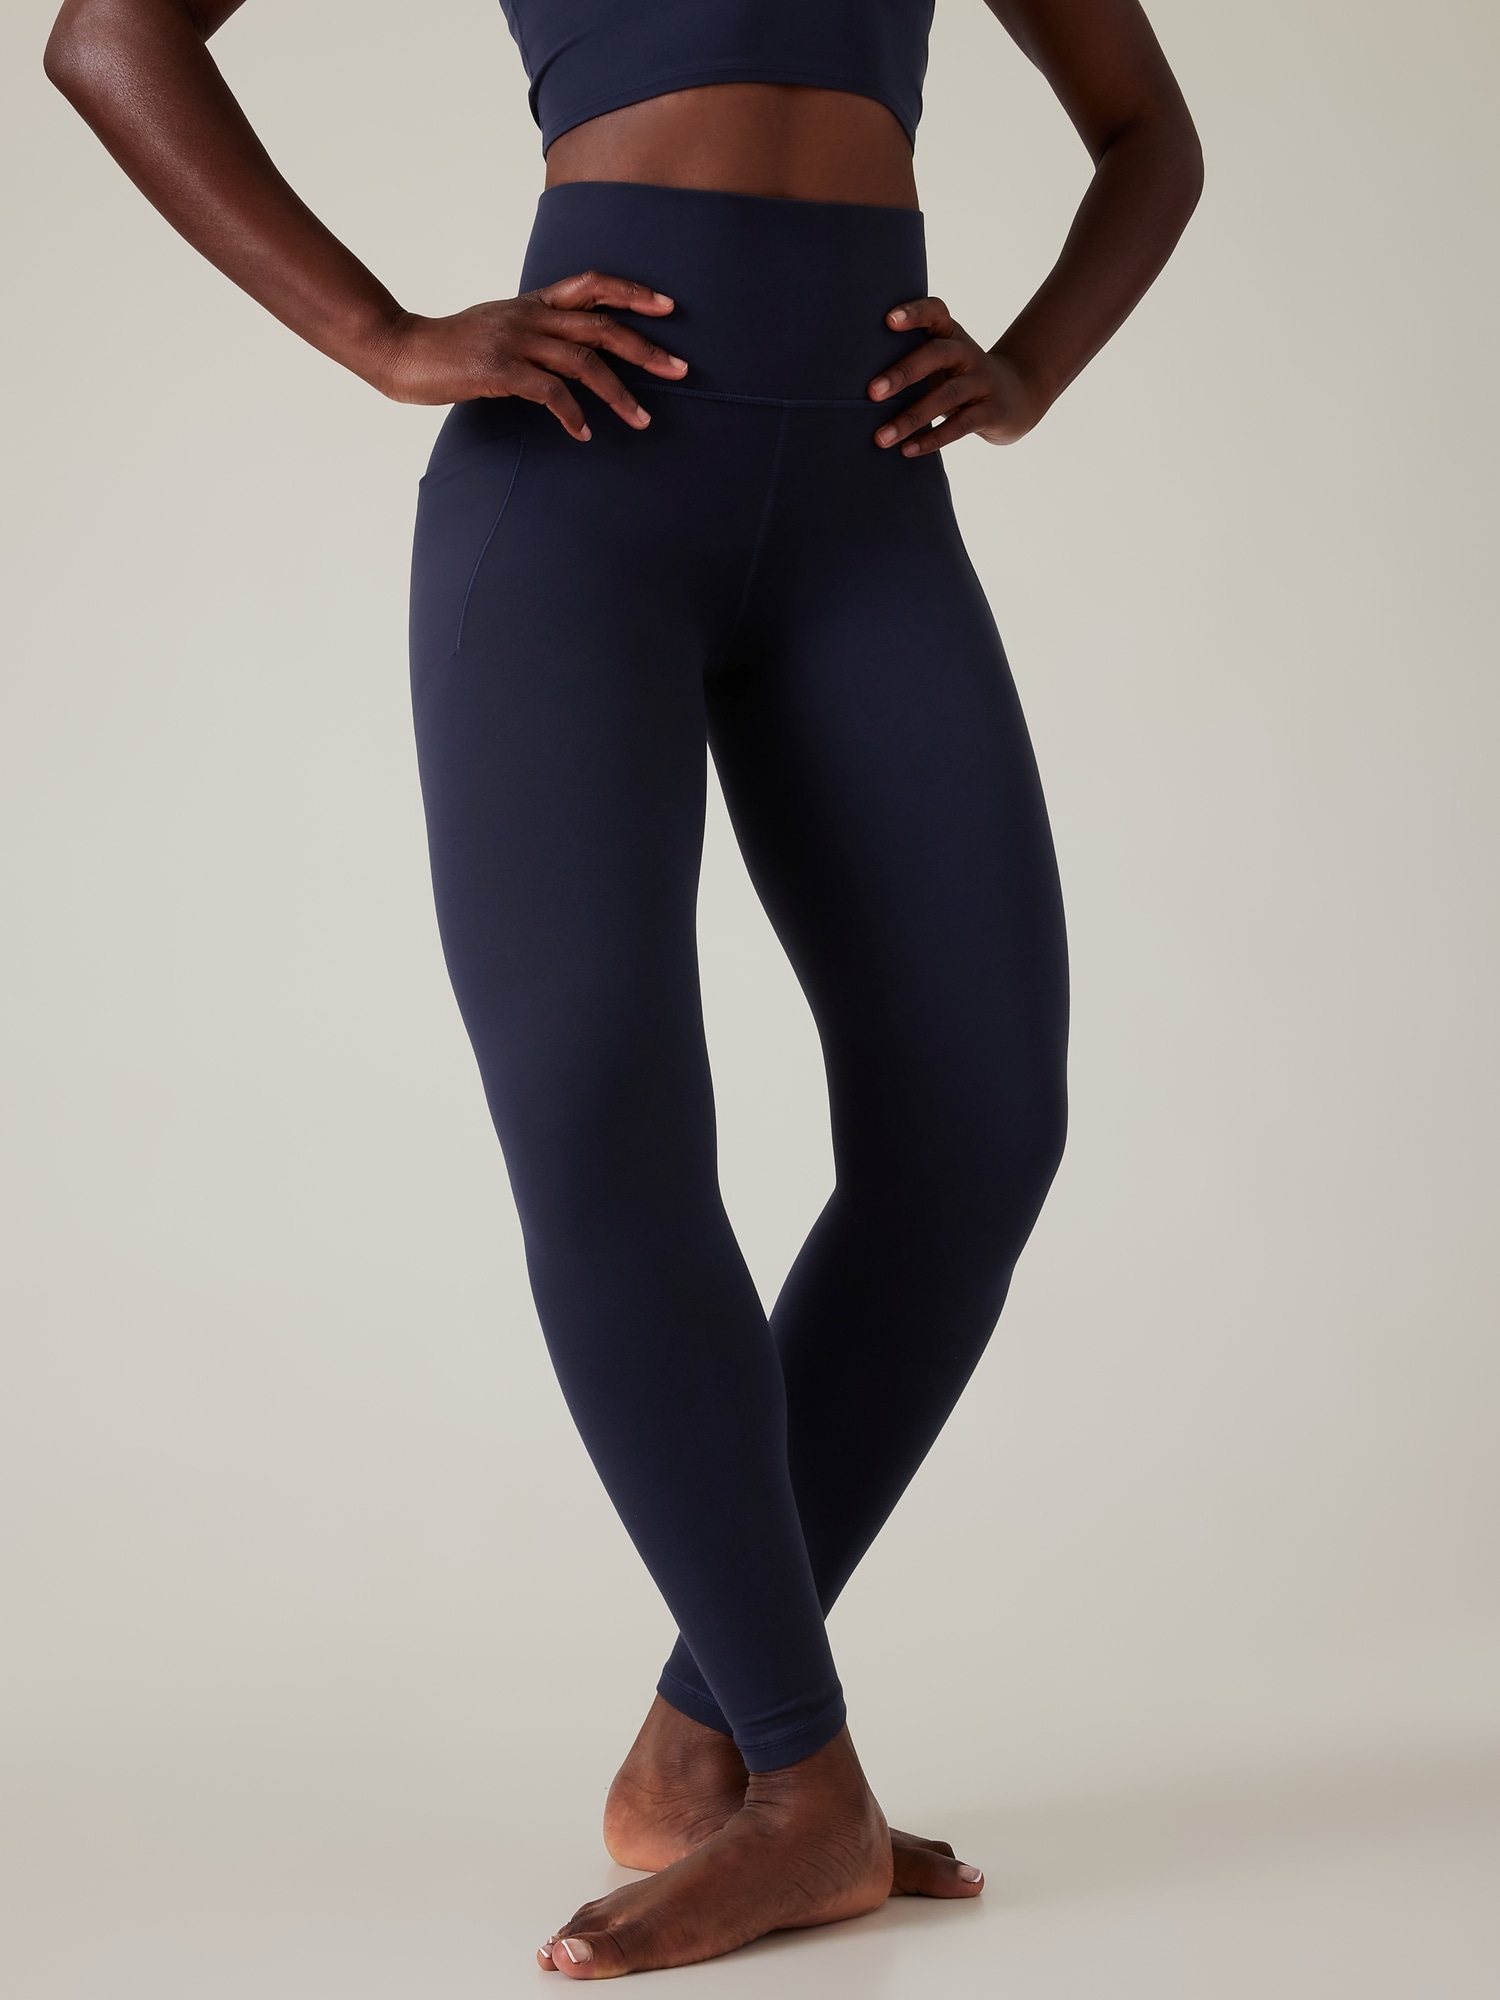 Why Lululemon's Yoga Pants Cost $30 More Than Athleta's